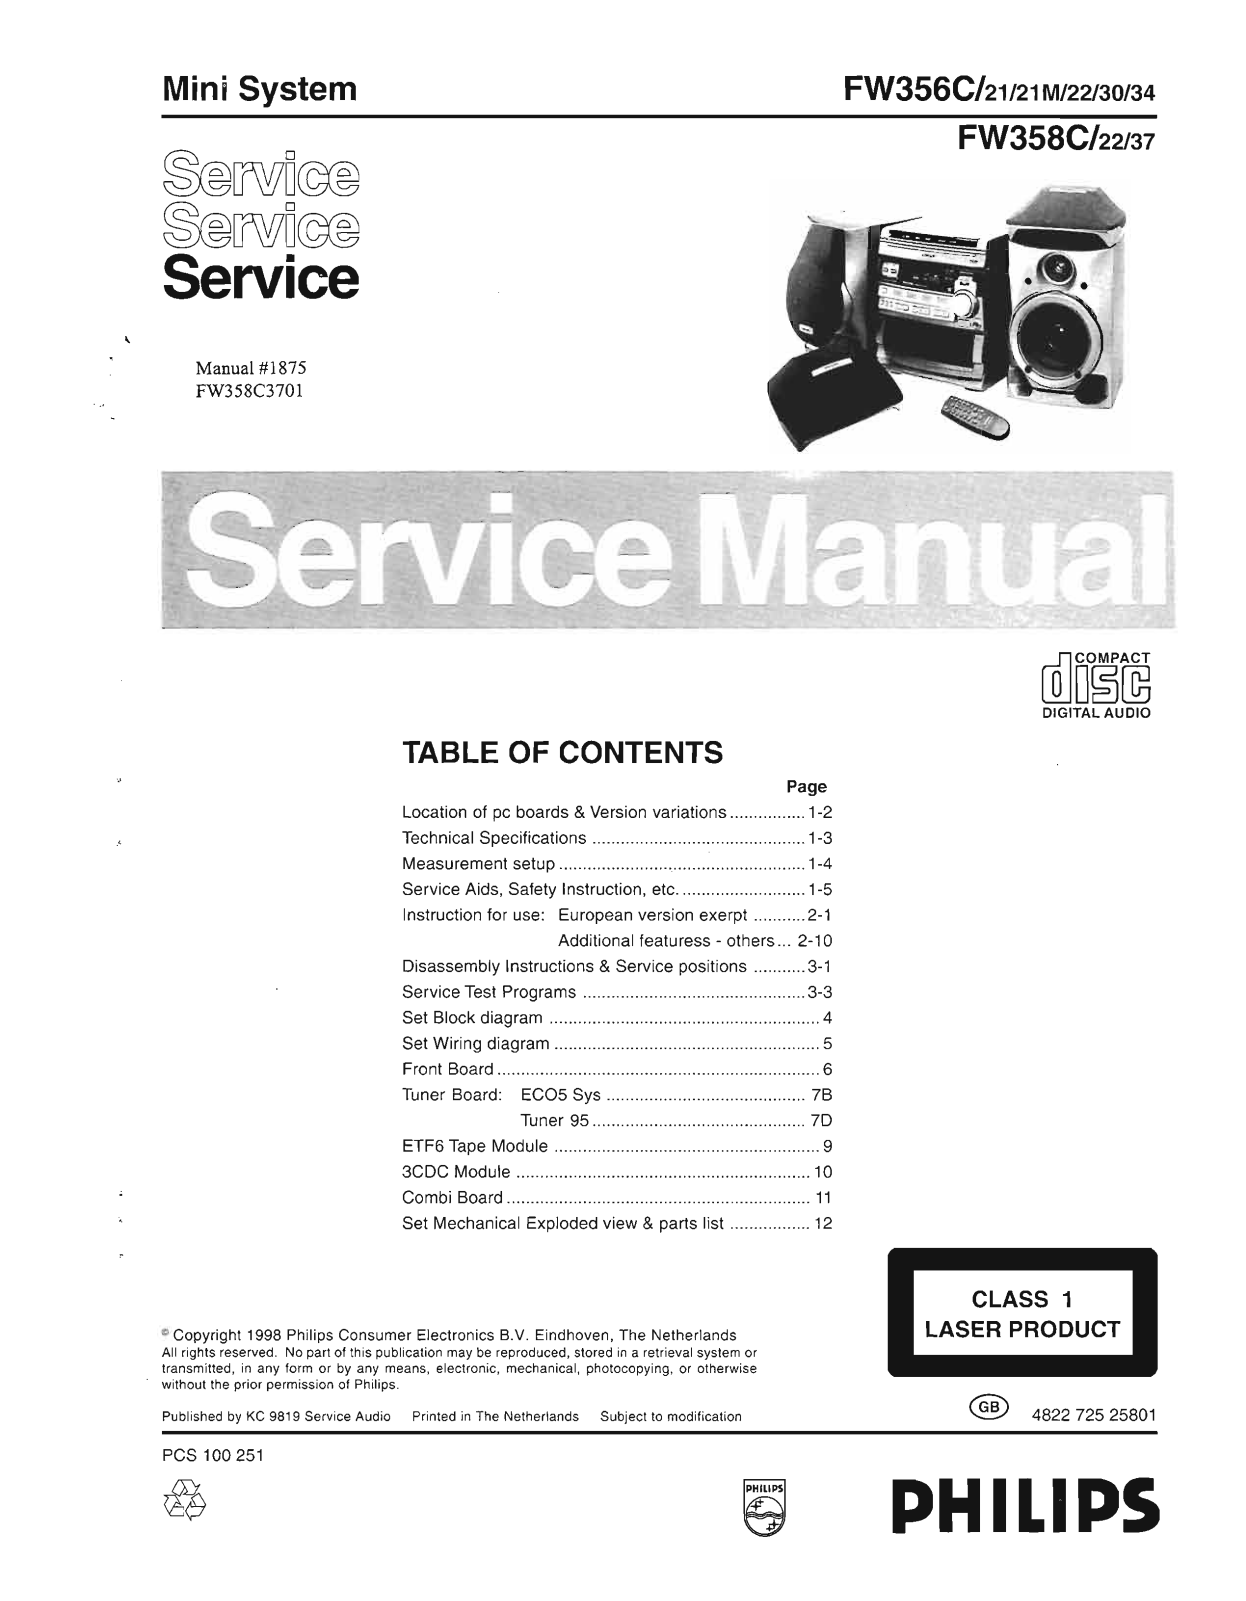 Philips FW-356-C Service Manual